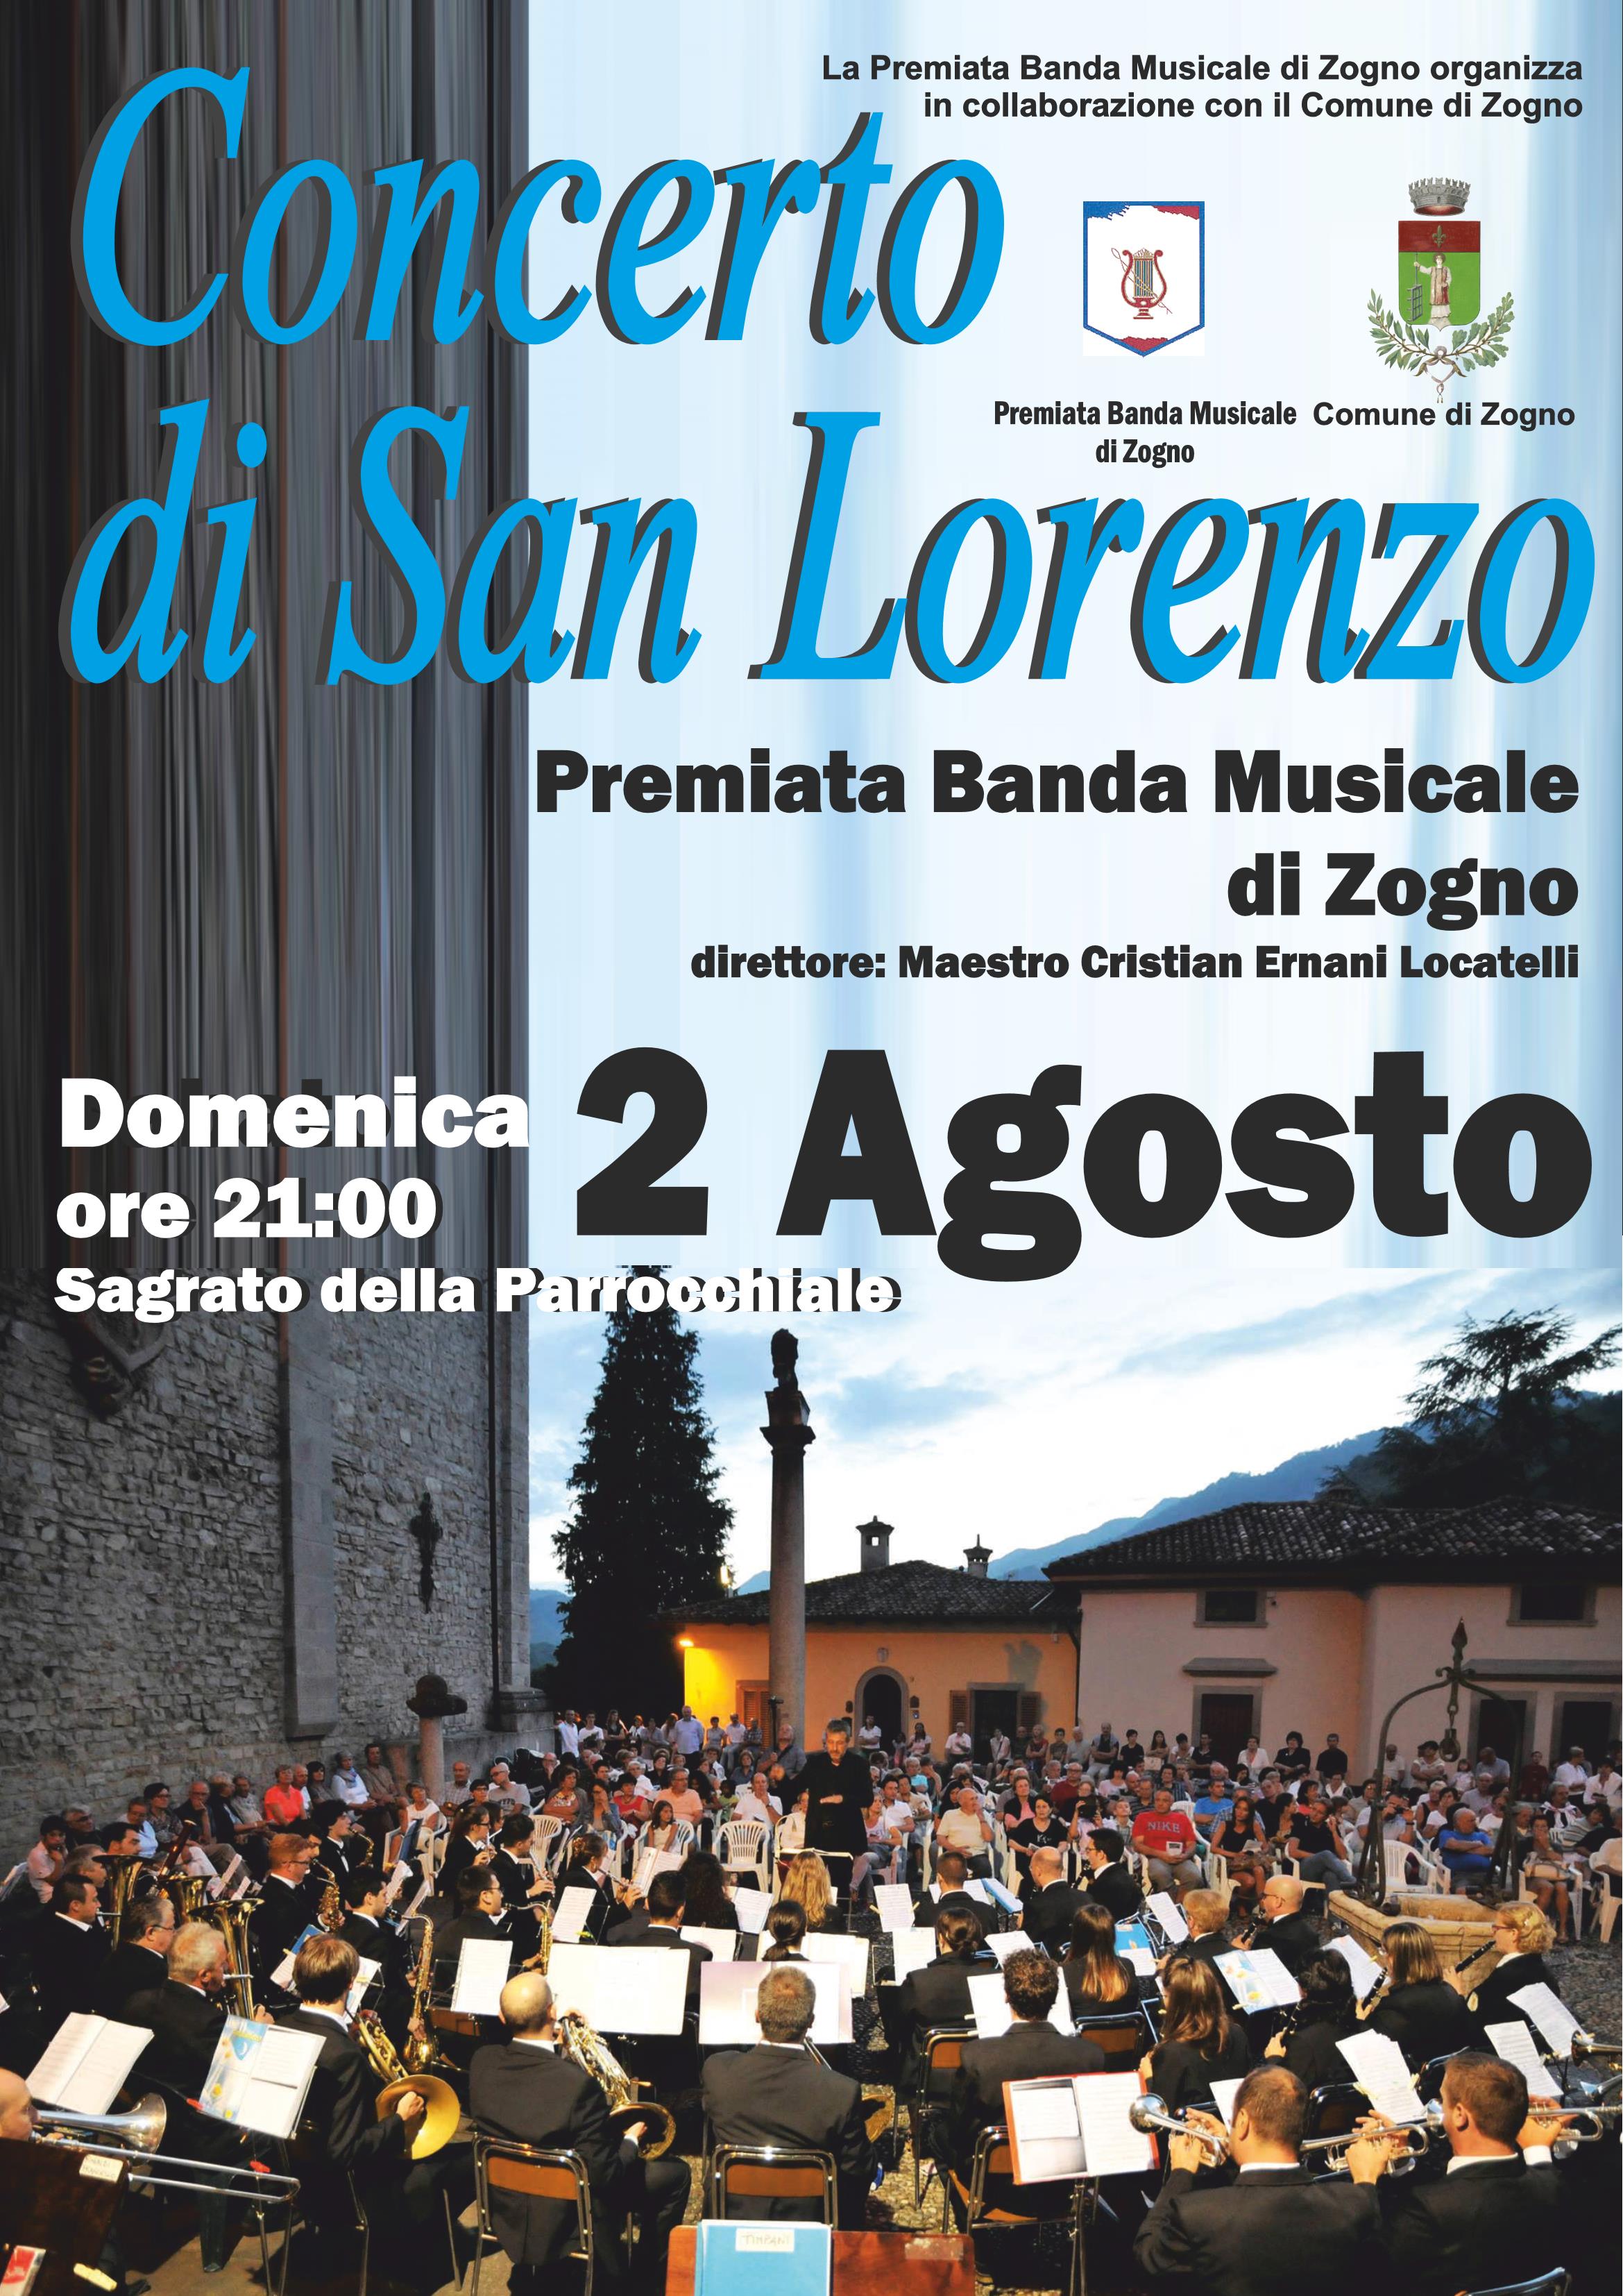 concerto banda sanlorenzo 2020-1_Page_1